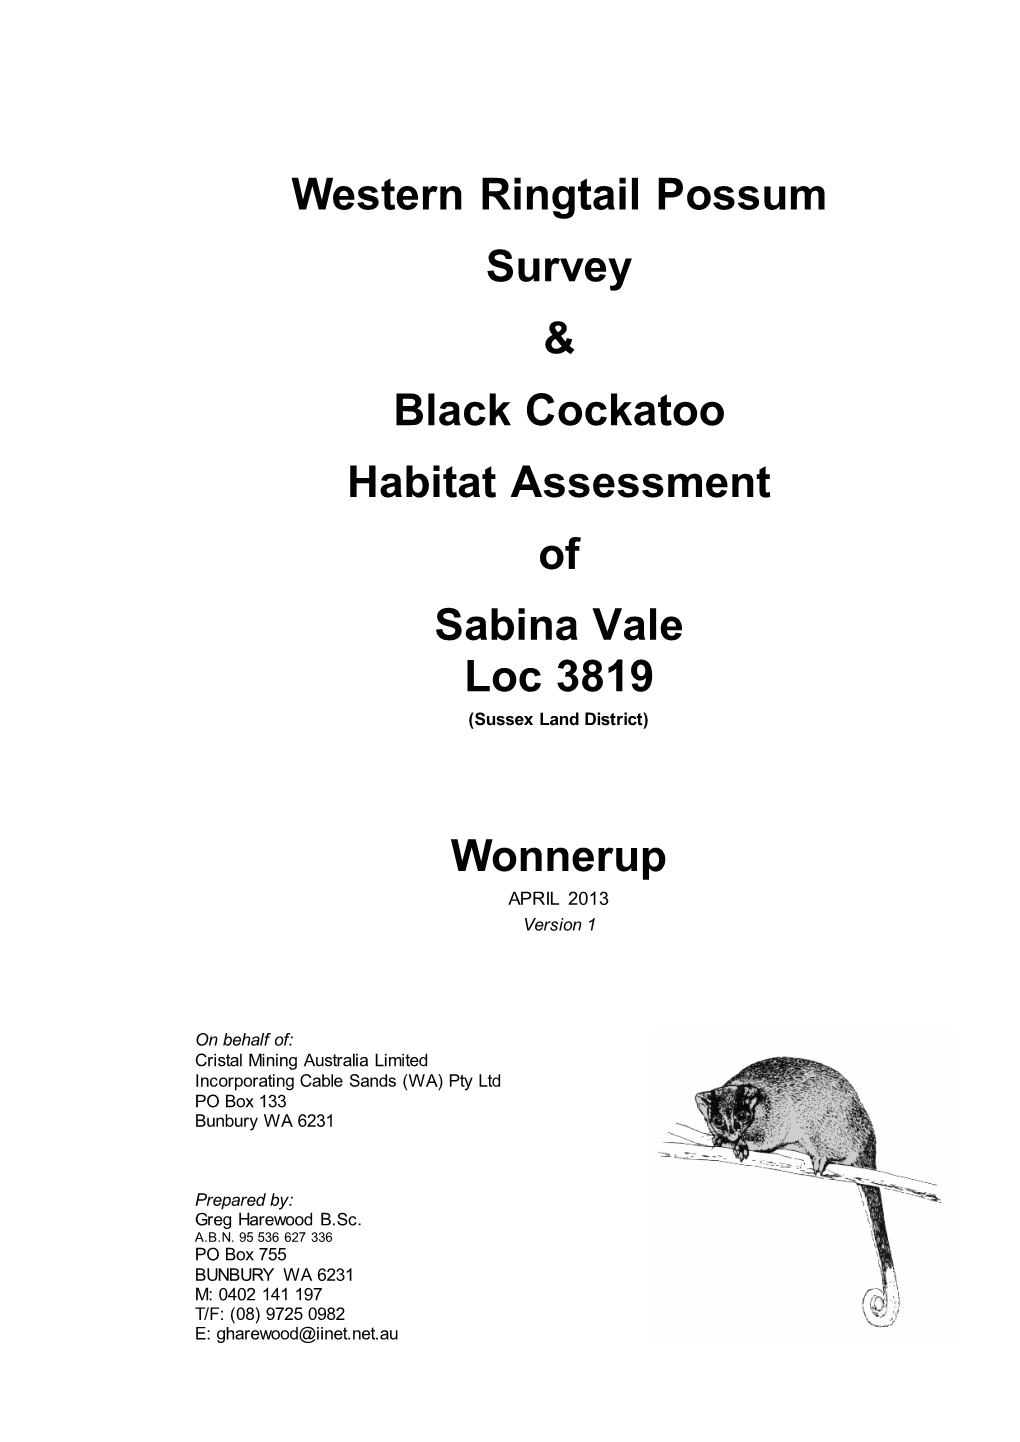 Western Ringtail Possum Survey & Black Cockatoo Habitat